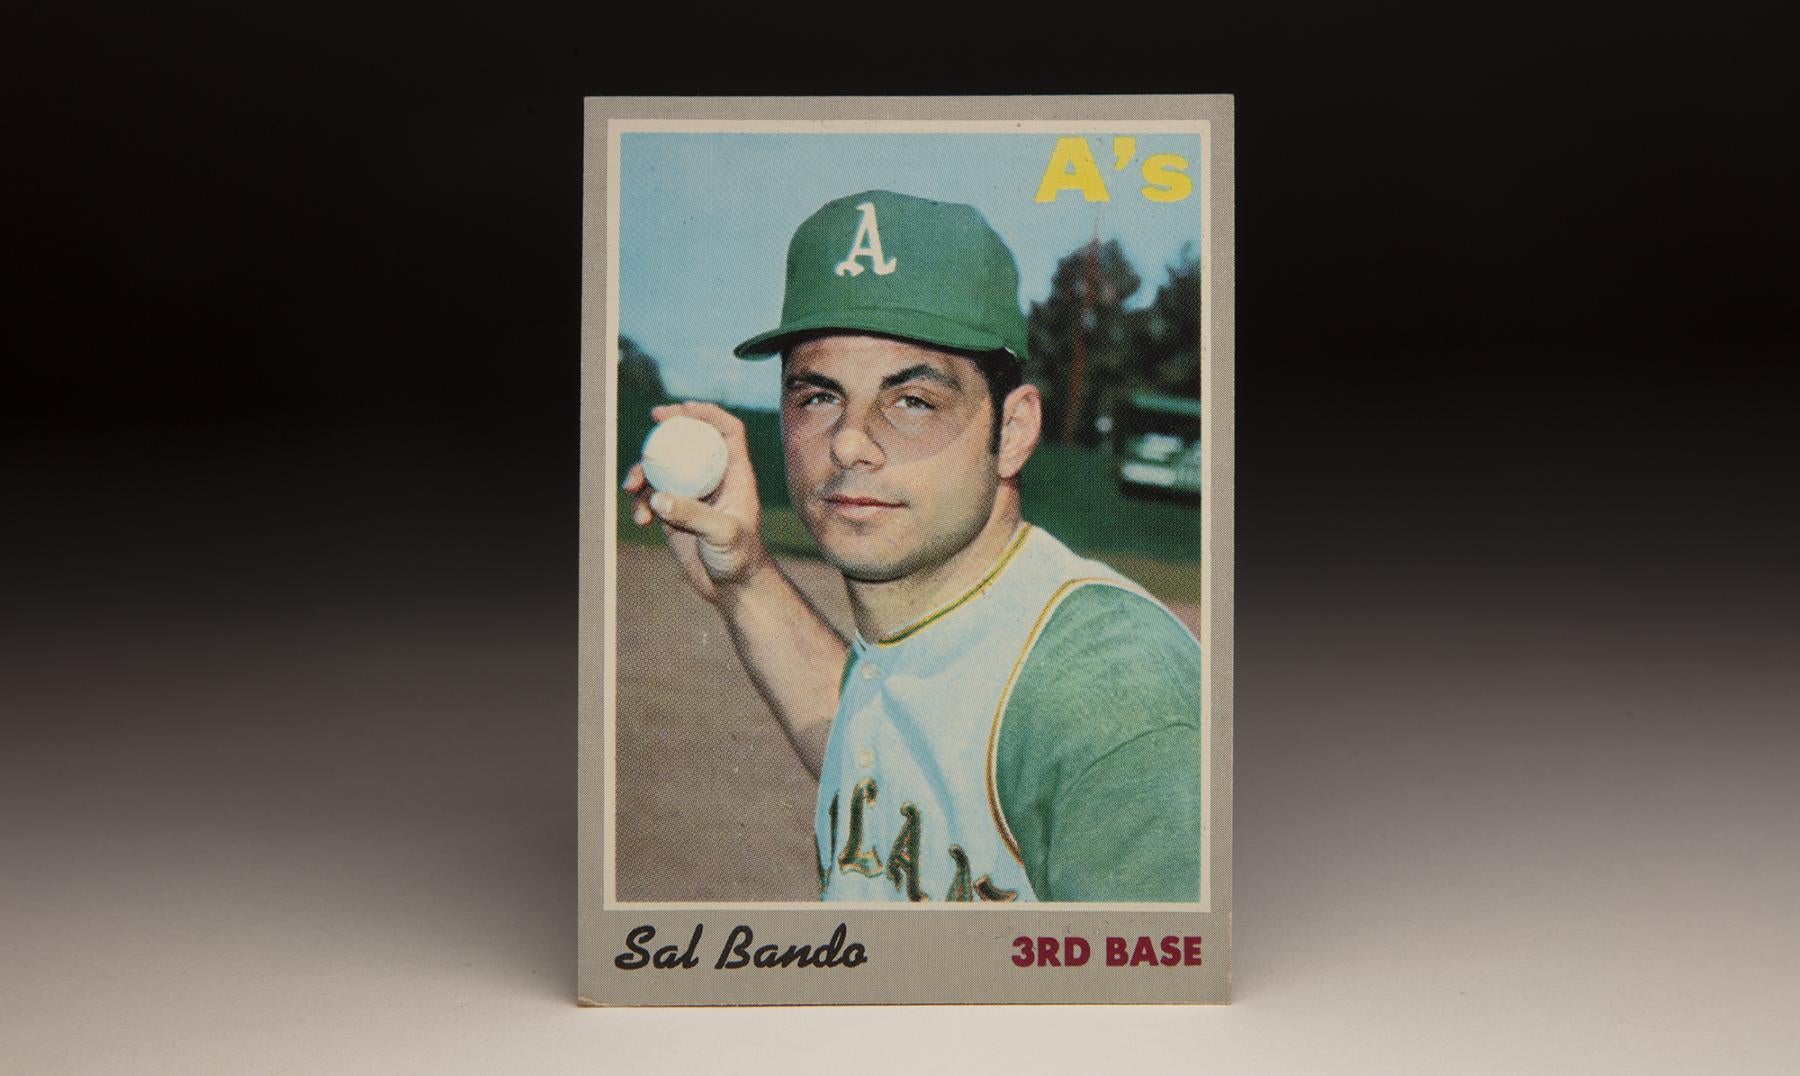 Sal Bando, former Brewers third baseman and general manager